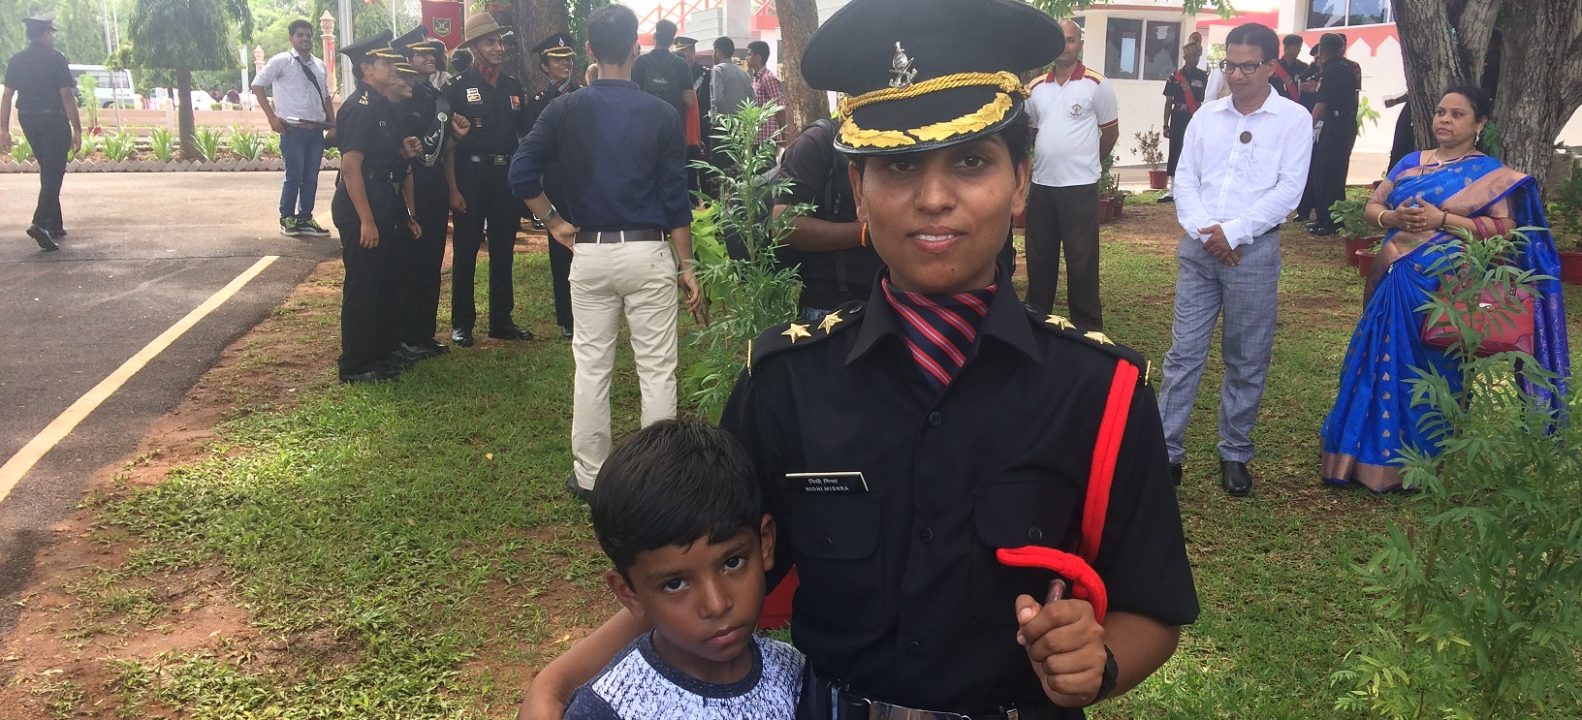 Lieutenant Nidhi Mishra with her son Suyash